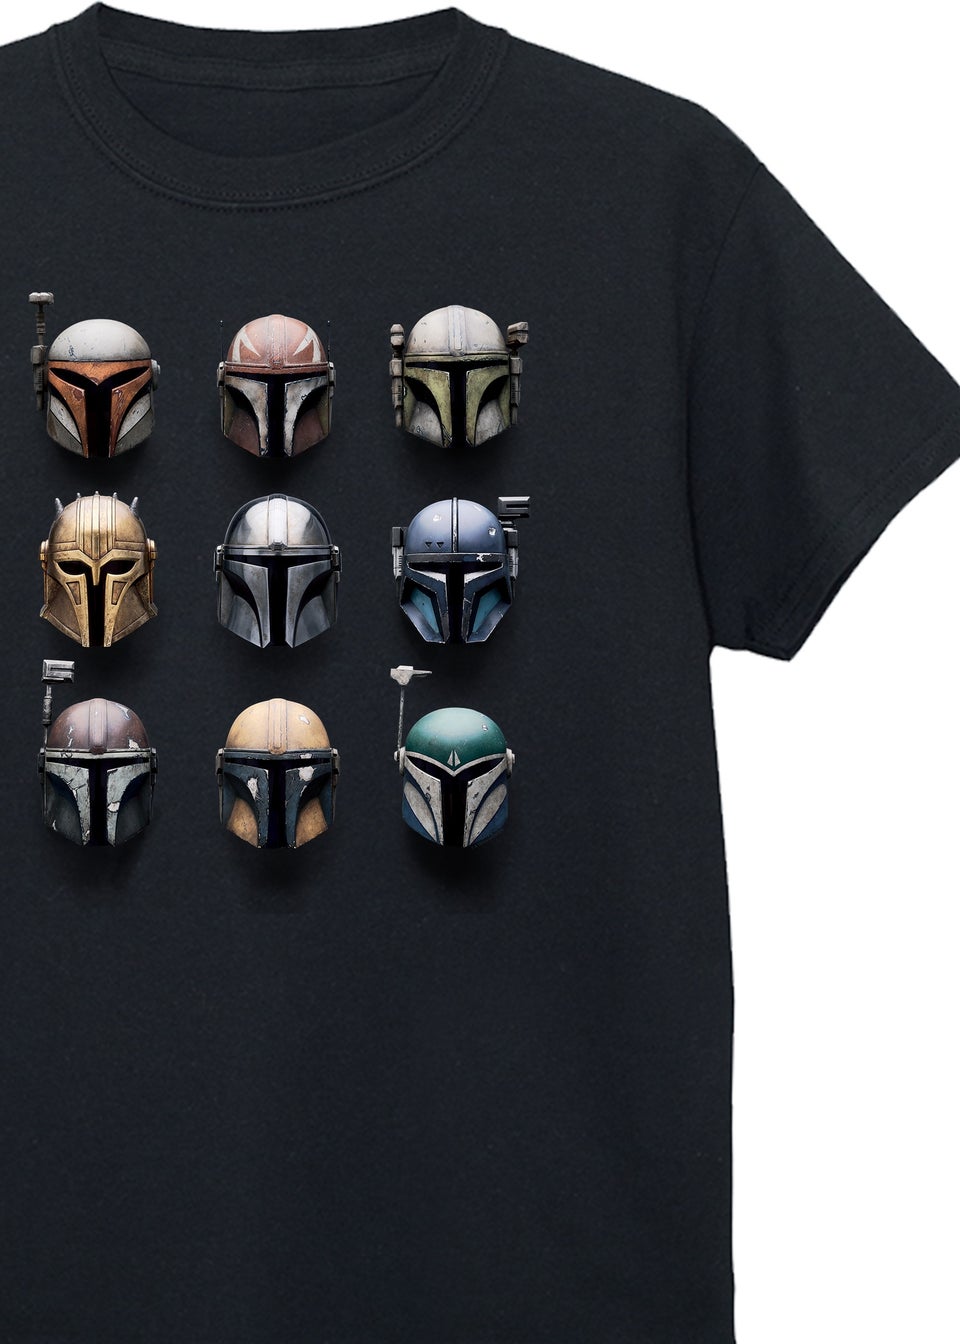 Star Wars Kids Black The Mandalorian Helmet Printed T-Shirt (3-13 yrs)